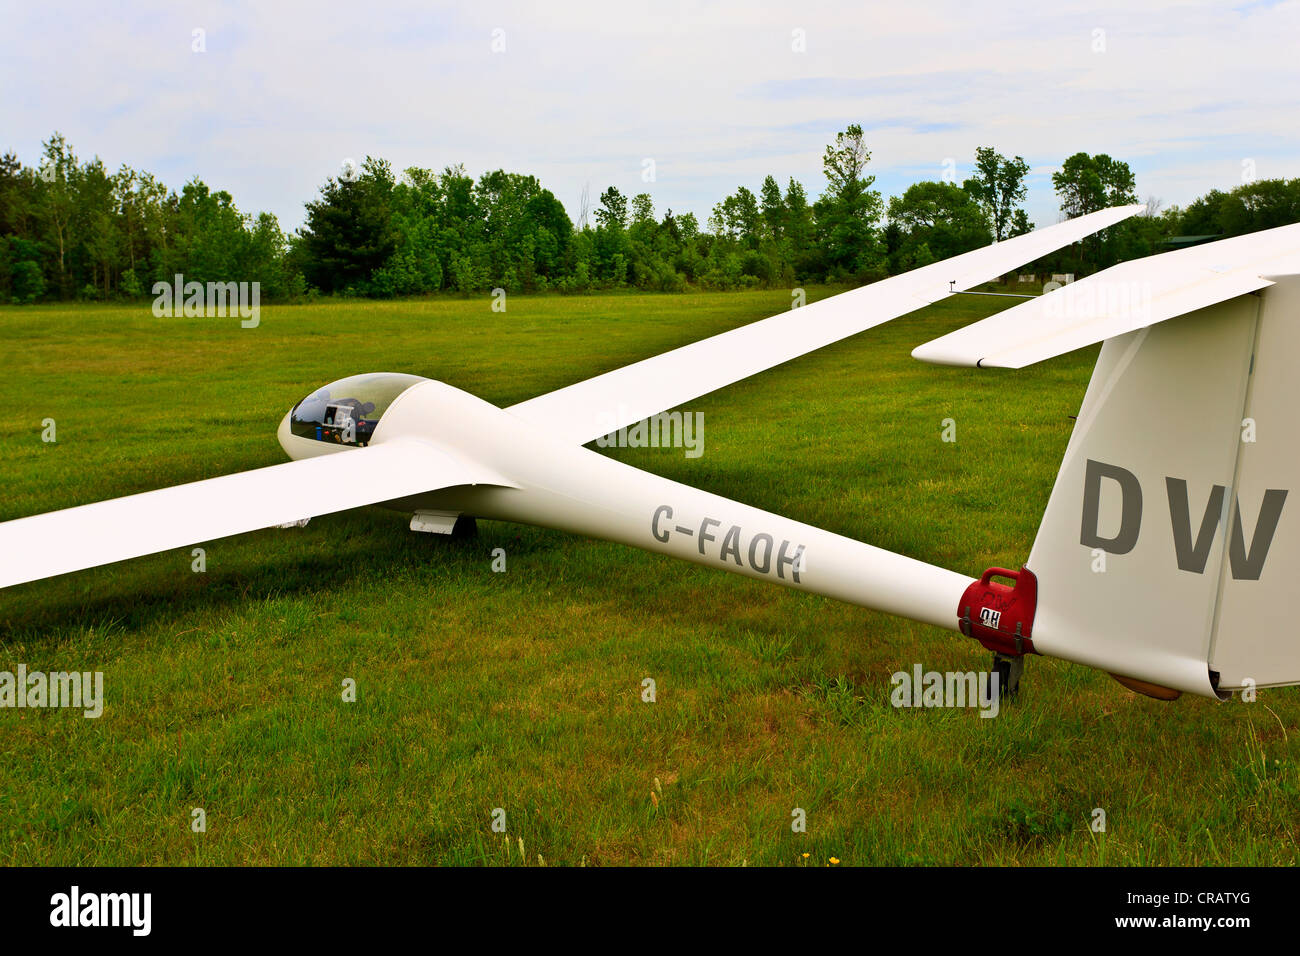 Glider on grass runway Stock Photo